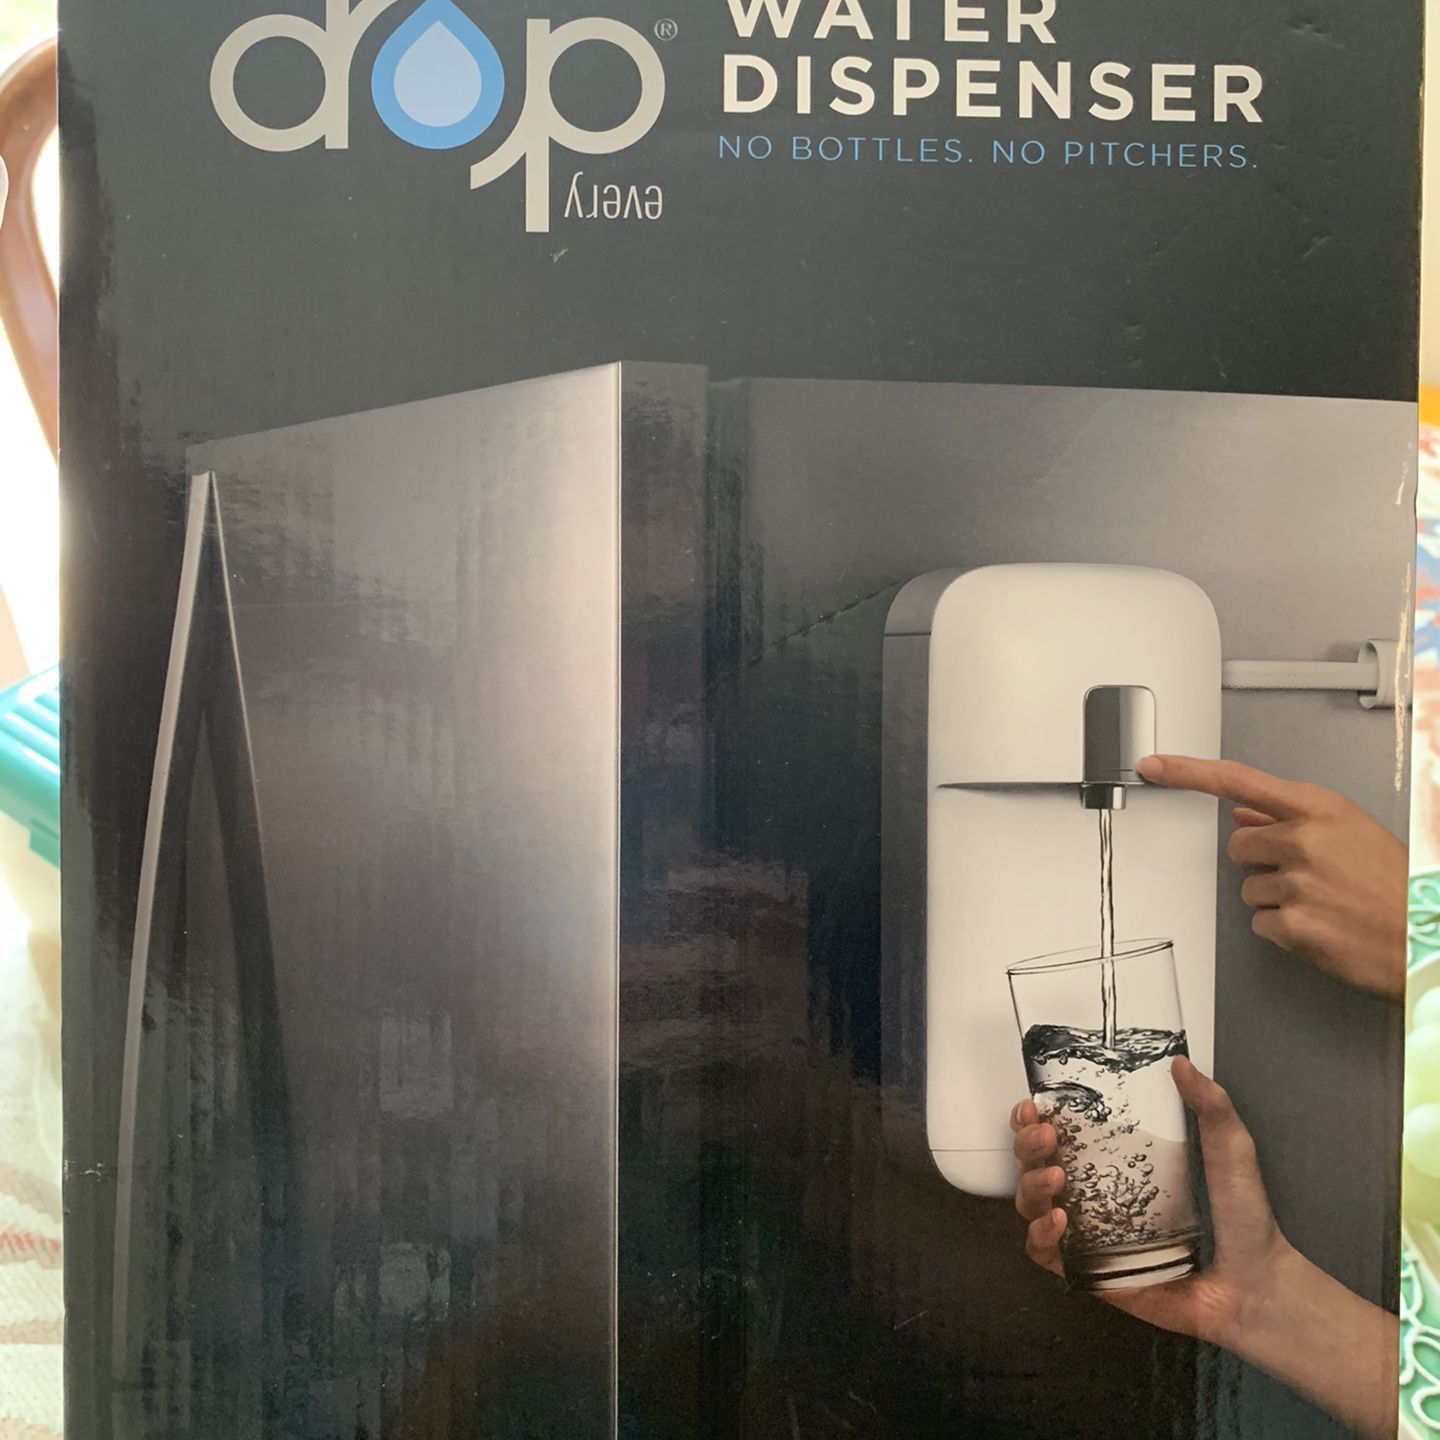 Every Drop Water Dispenser